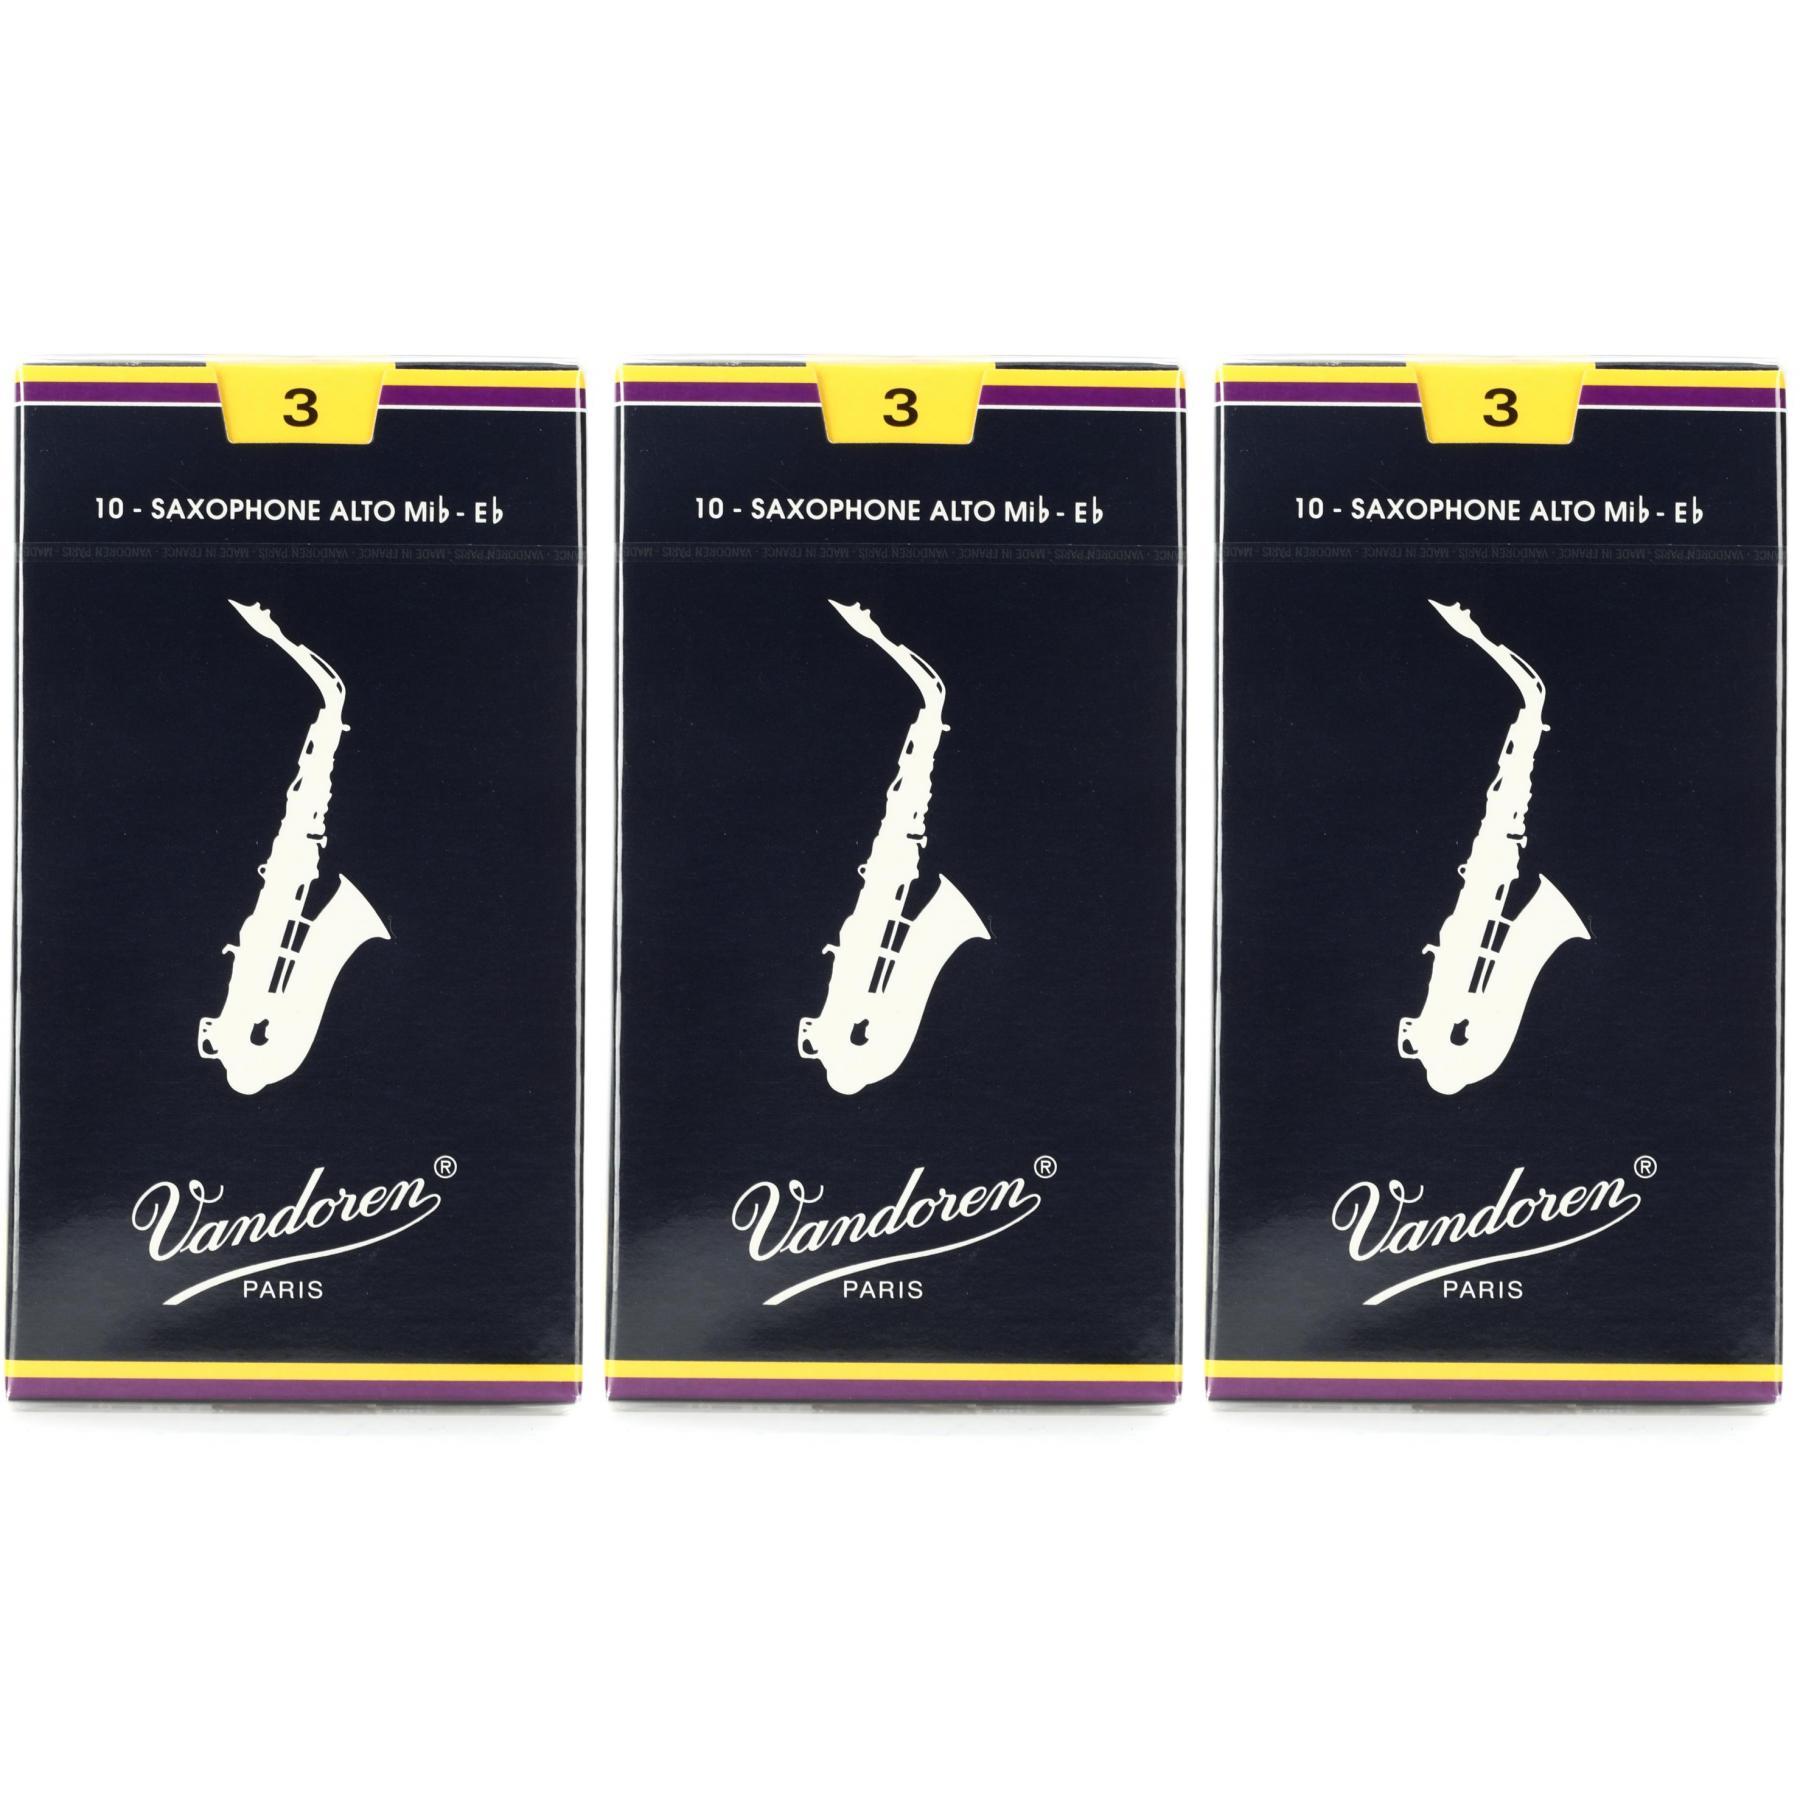 Vandoren CG100B Clarinet Cork Grease and Vandoren CR102 Bb Clarinet Traditional Reeds Strength 2; Box of 10 Bundle 